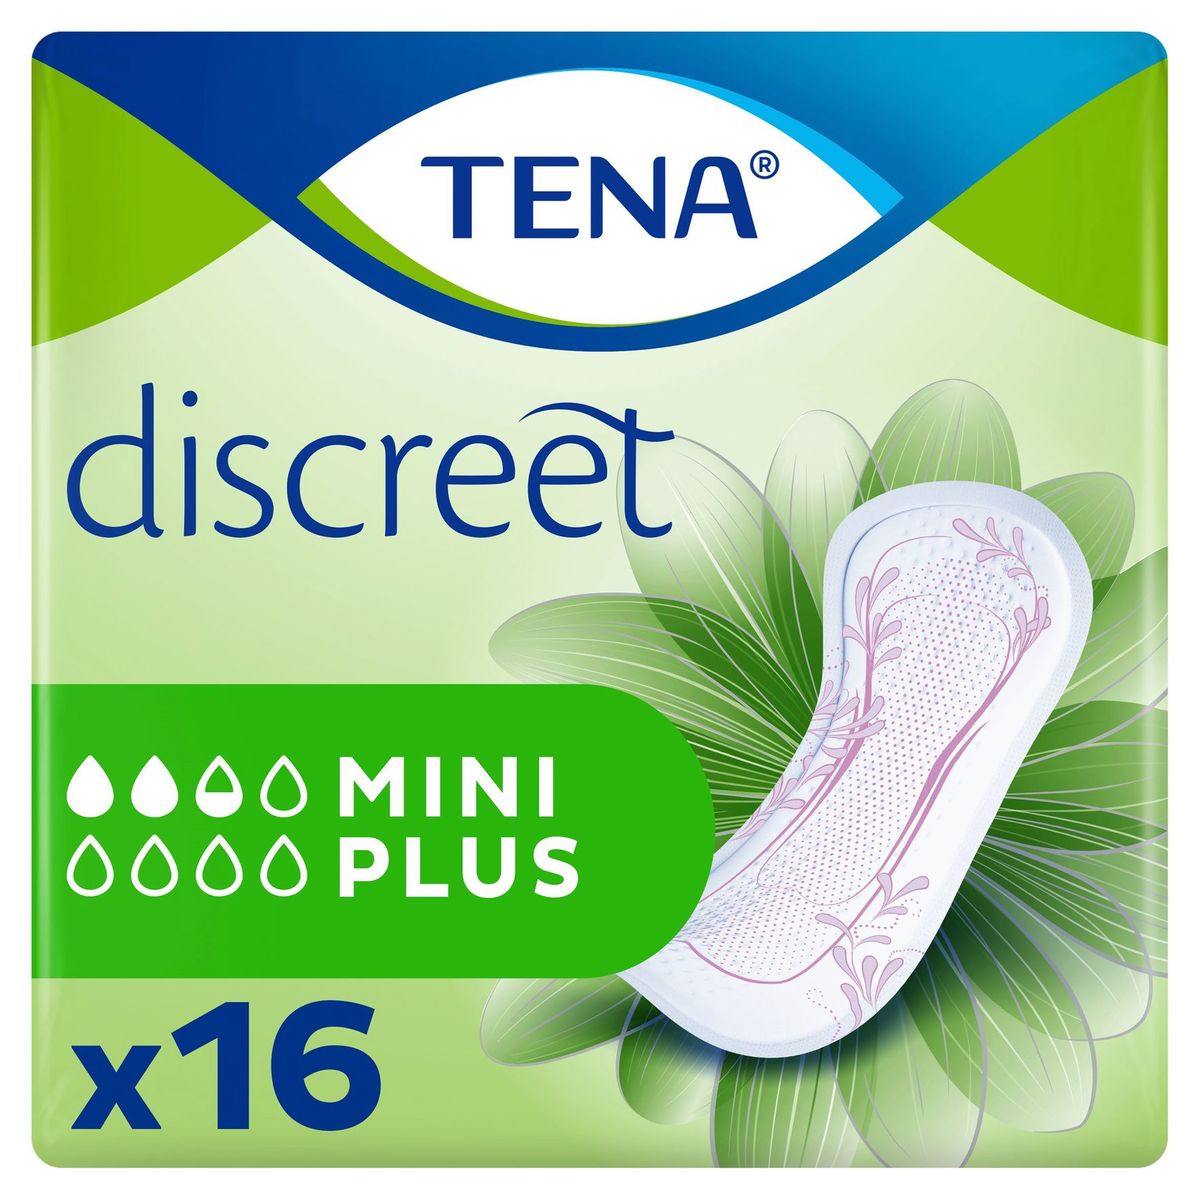 Tena Discreet Mini Plus 16 Serviettes